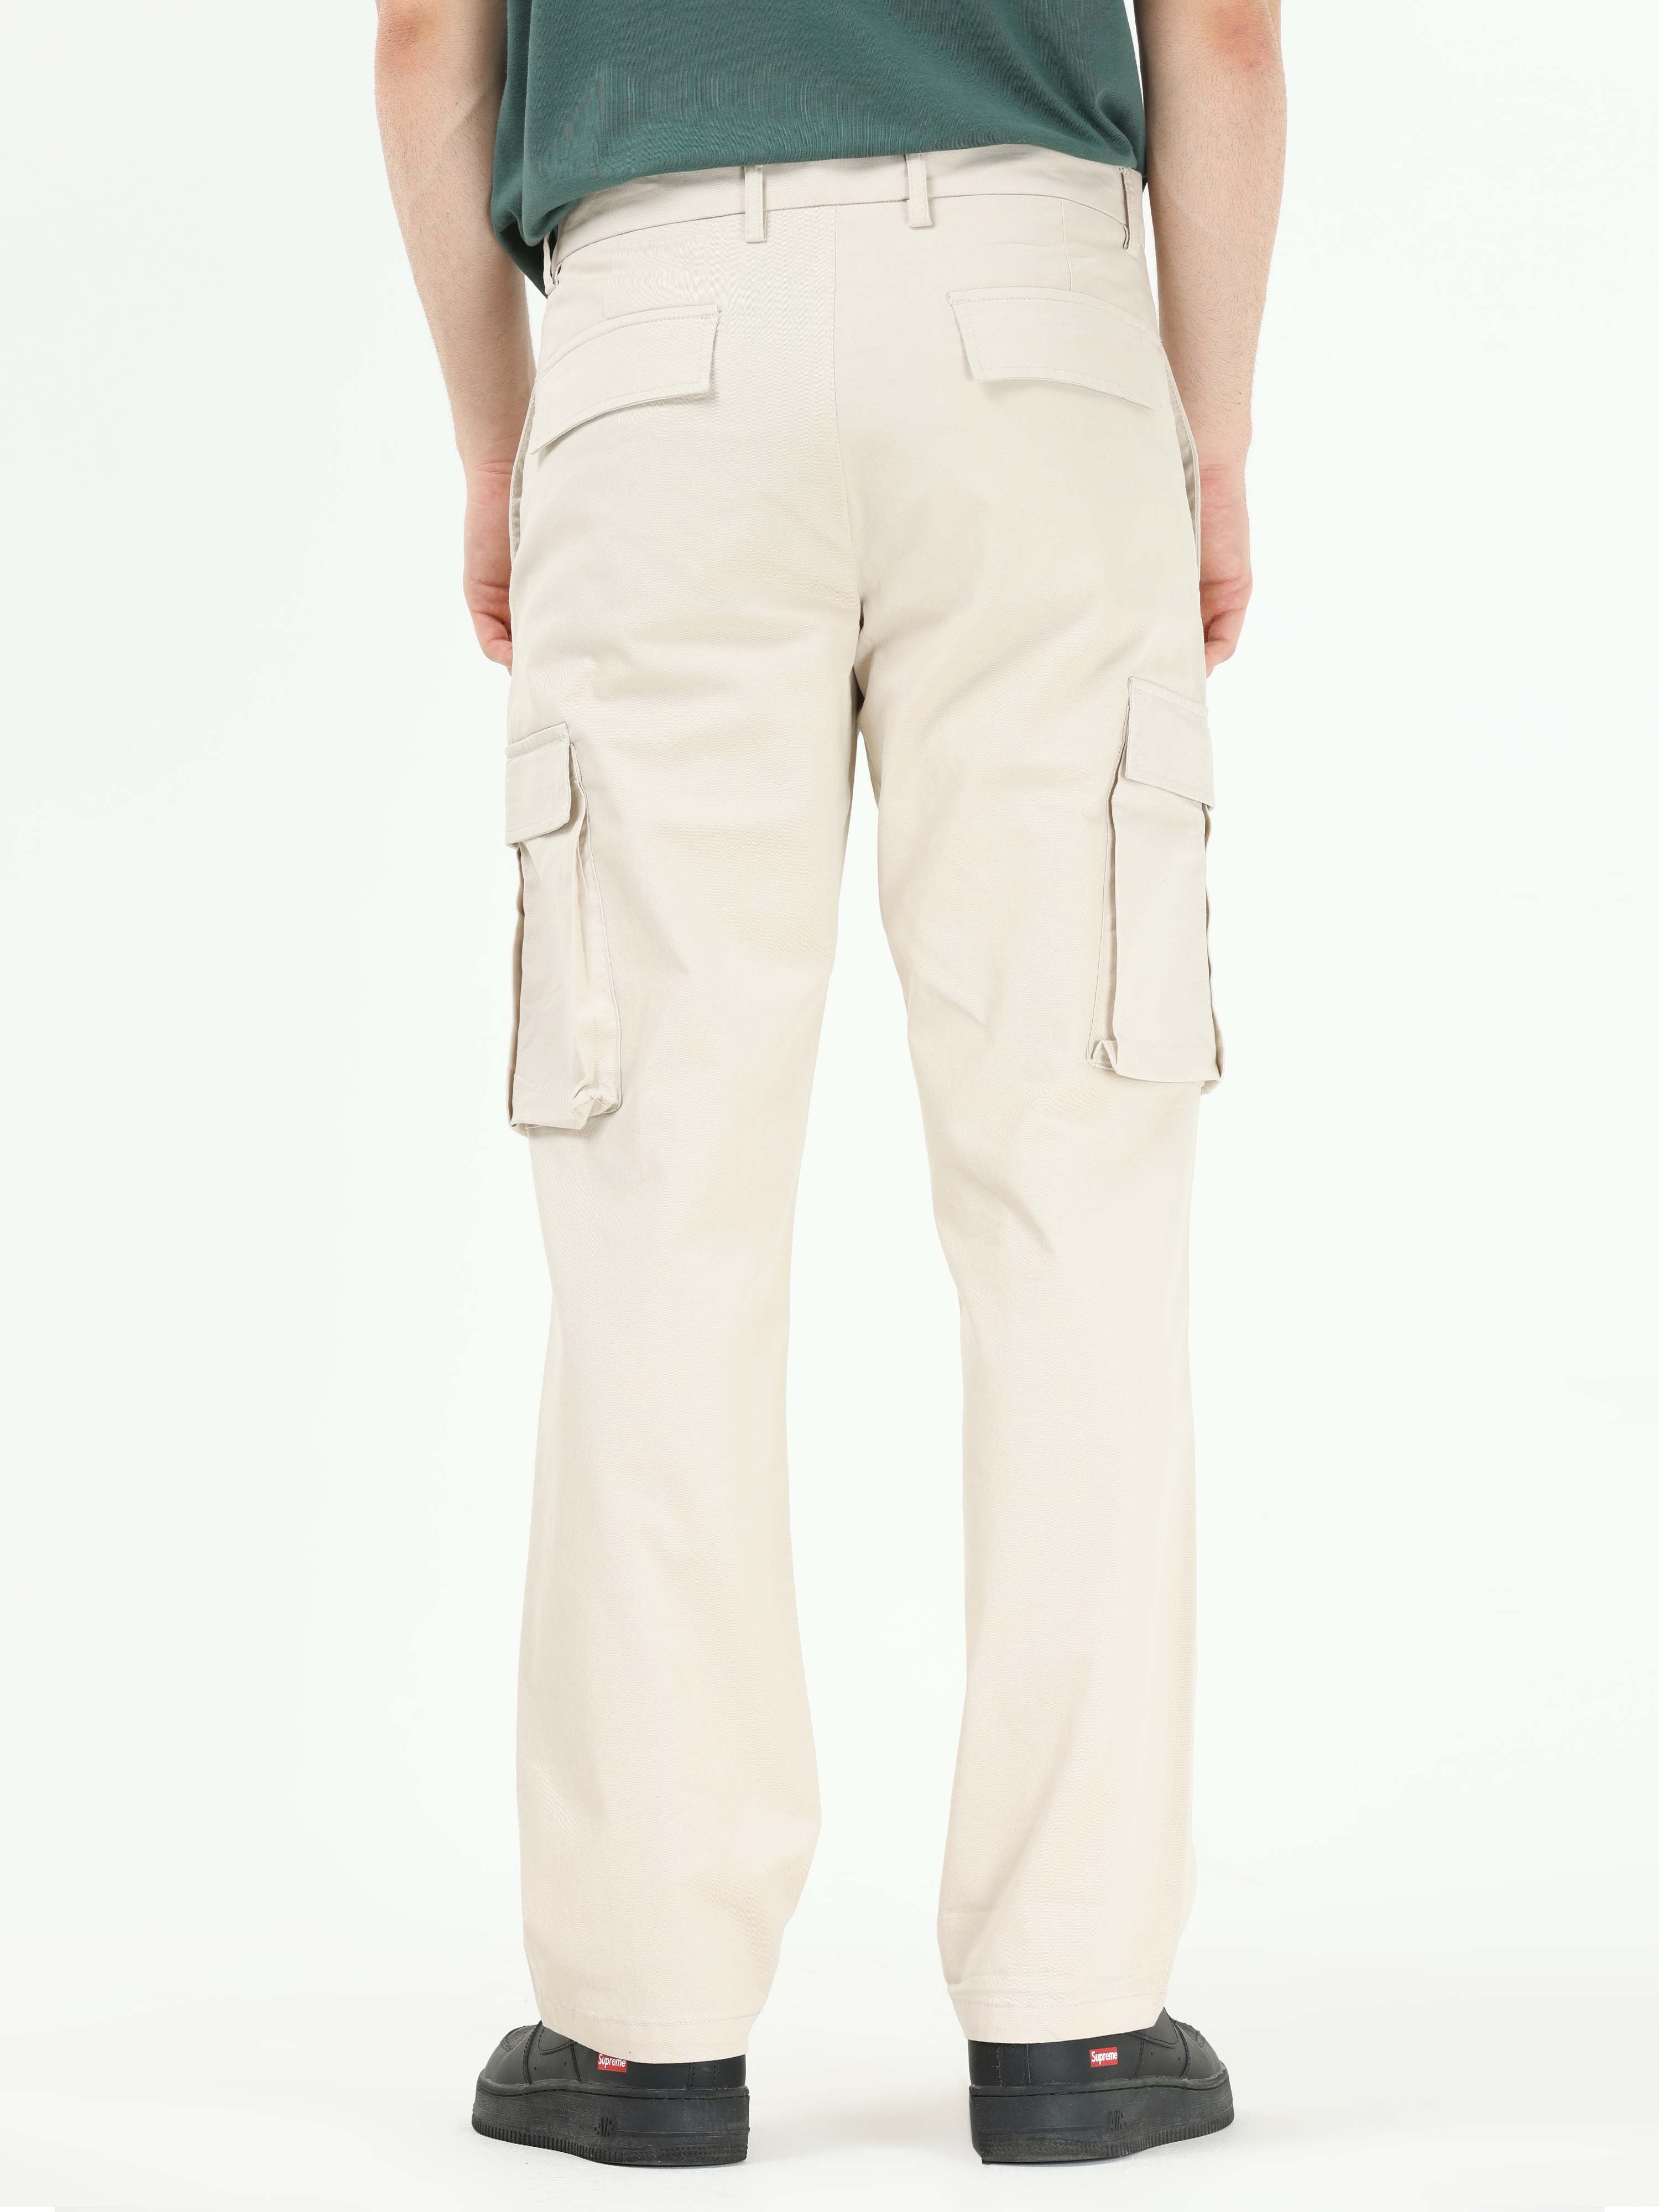 Men Casual Pants Baggy Pants Linen Cotton Blend Trousers Elastic Waist  Pants UK | eBay